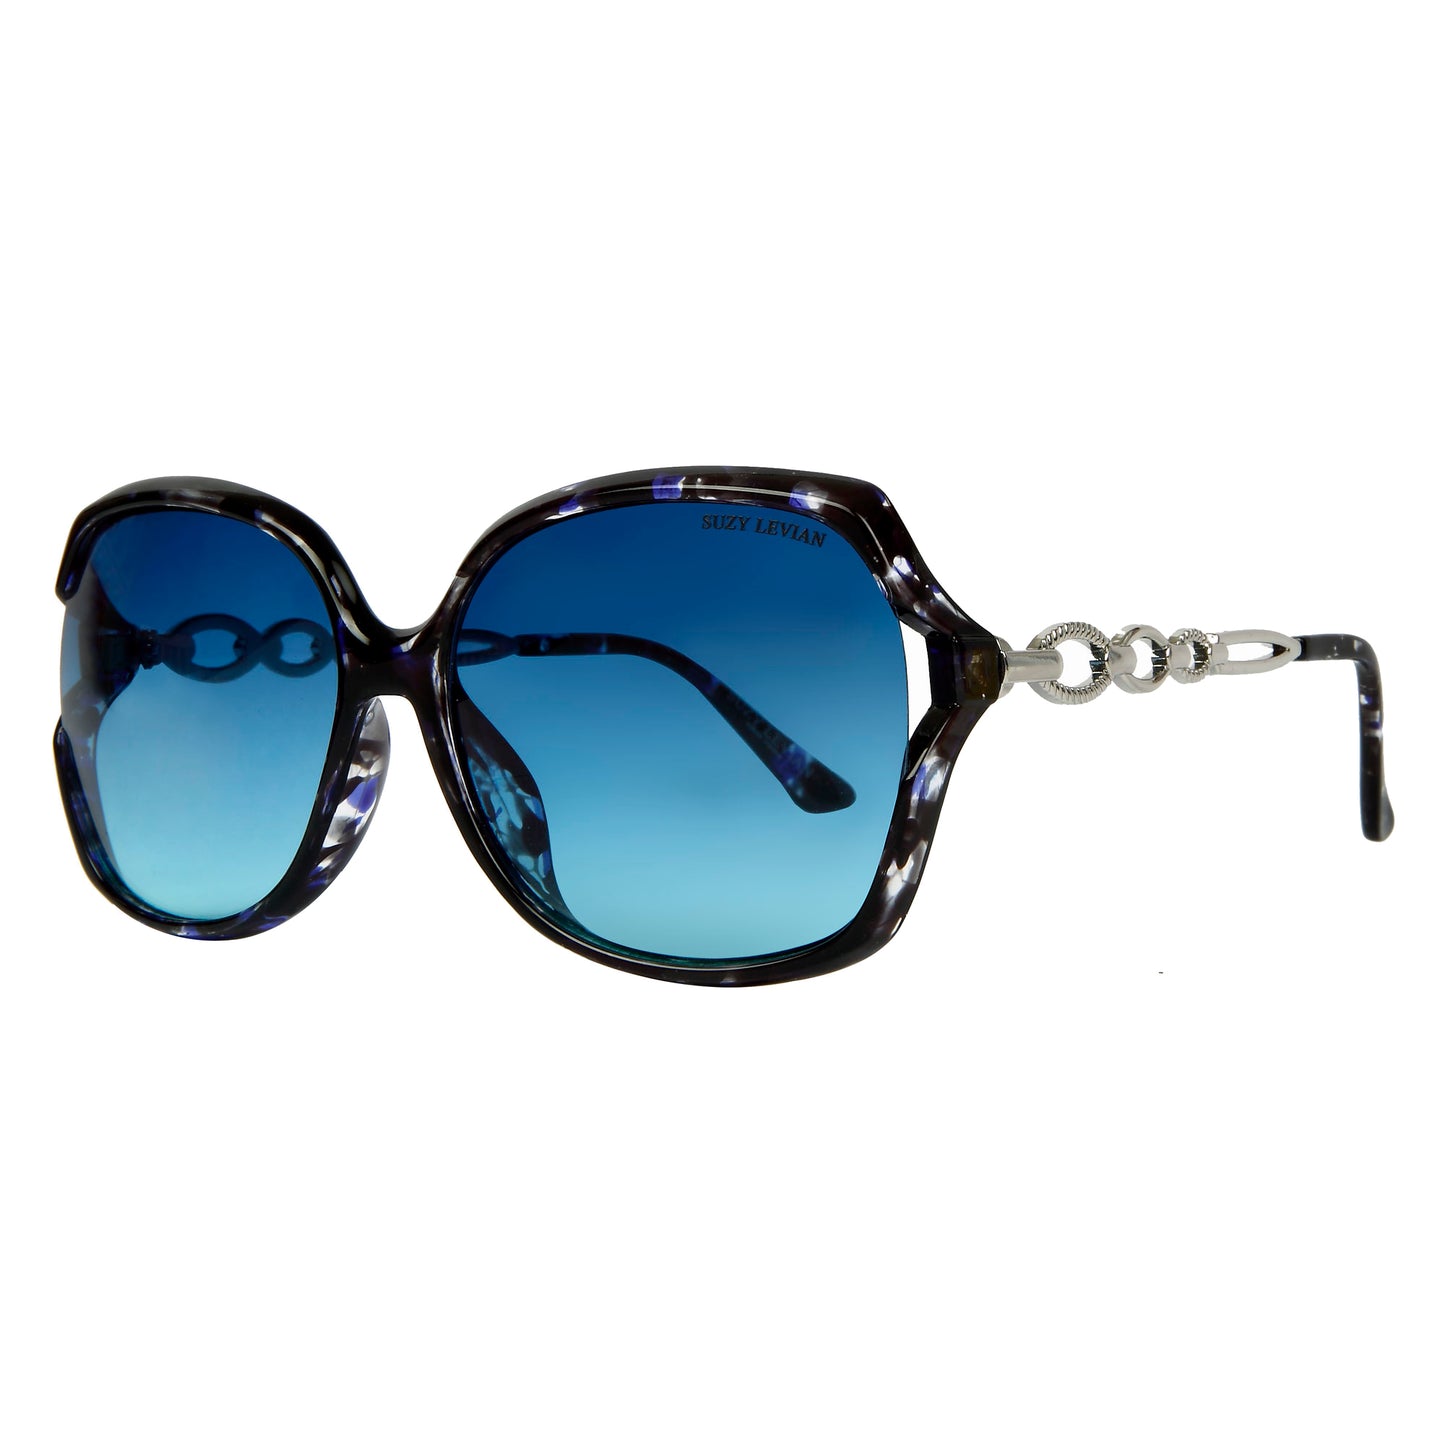 Suzy Levian Women's Blue Oversize Silver Chain Accent Sunglasses